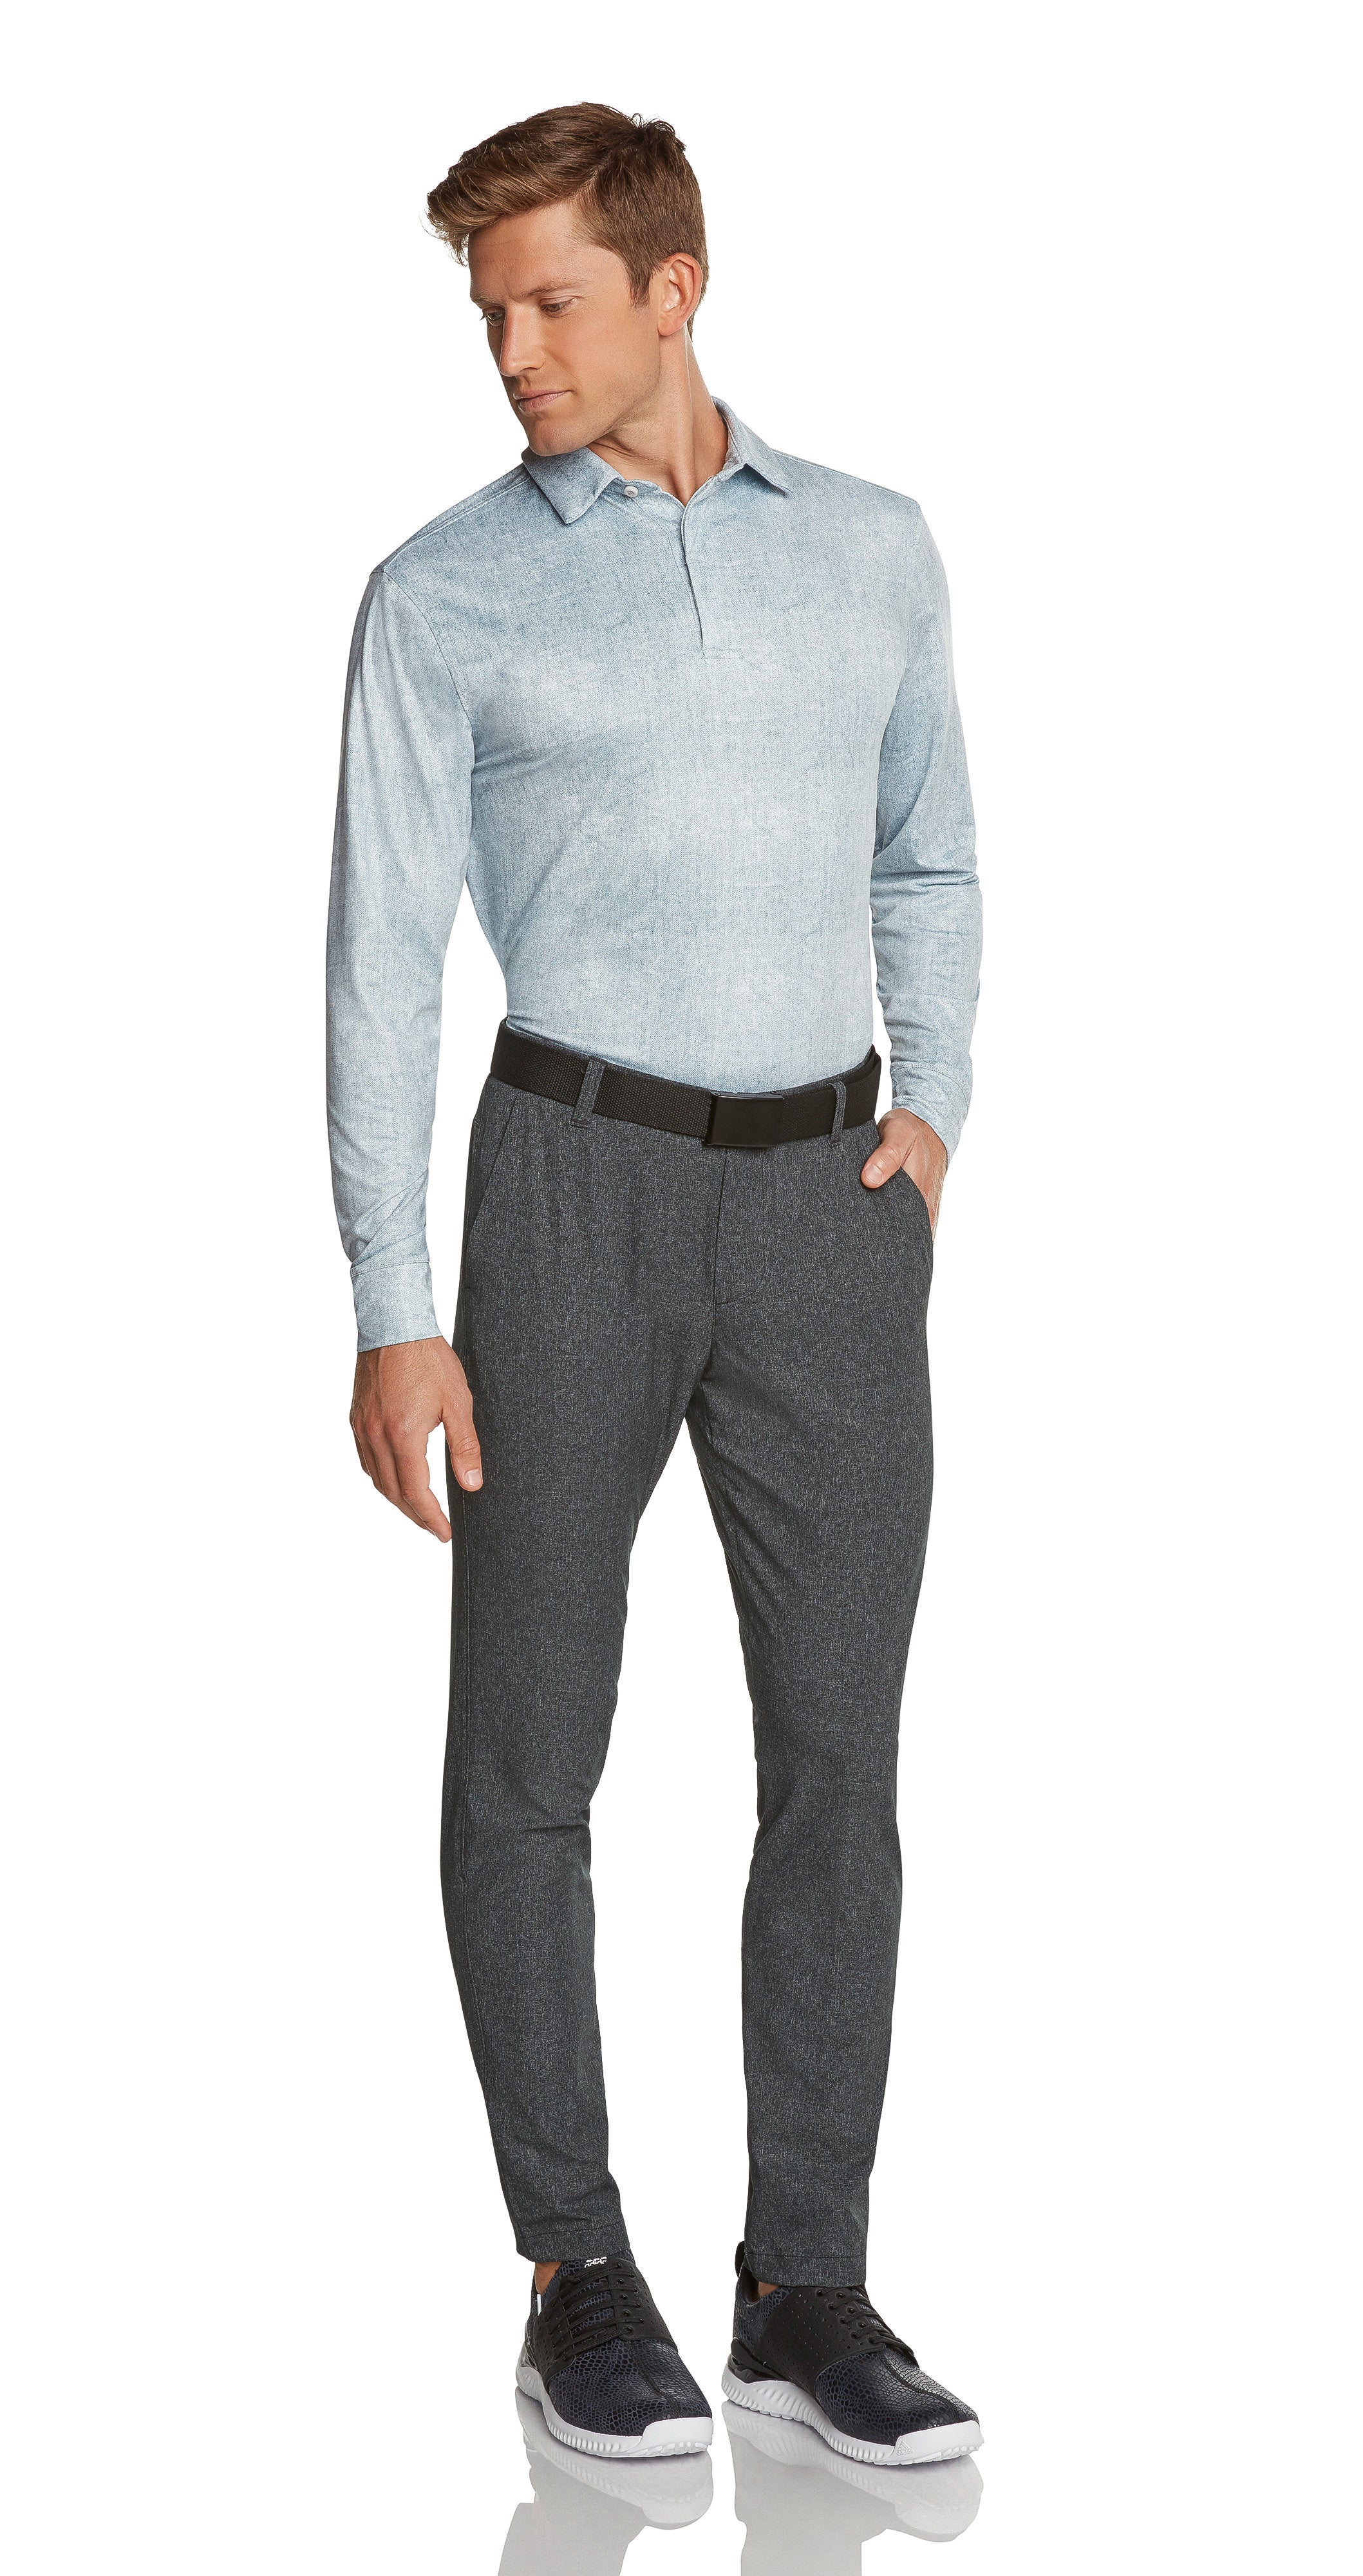 Men's Dry-Fit Long Sleeve Golf Polo Shirt